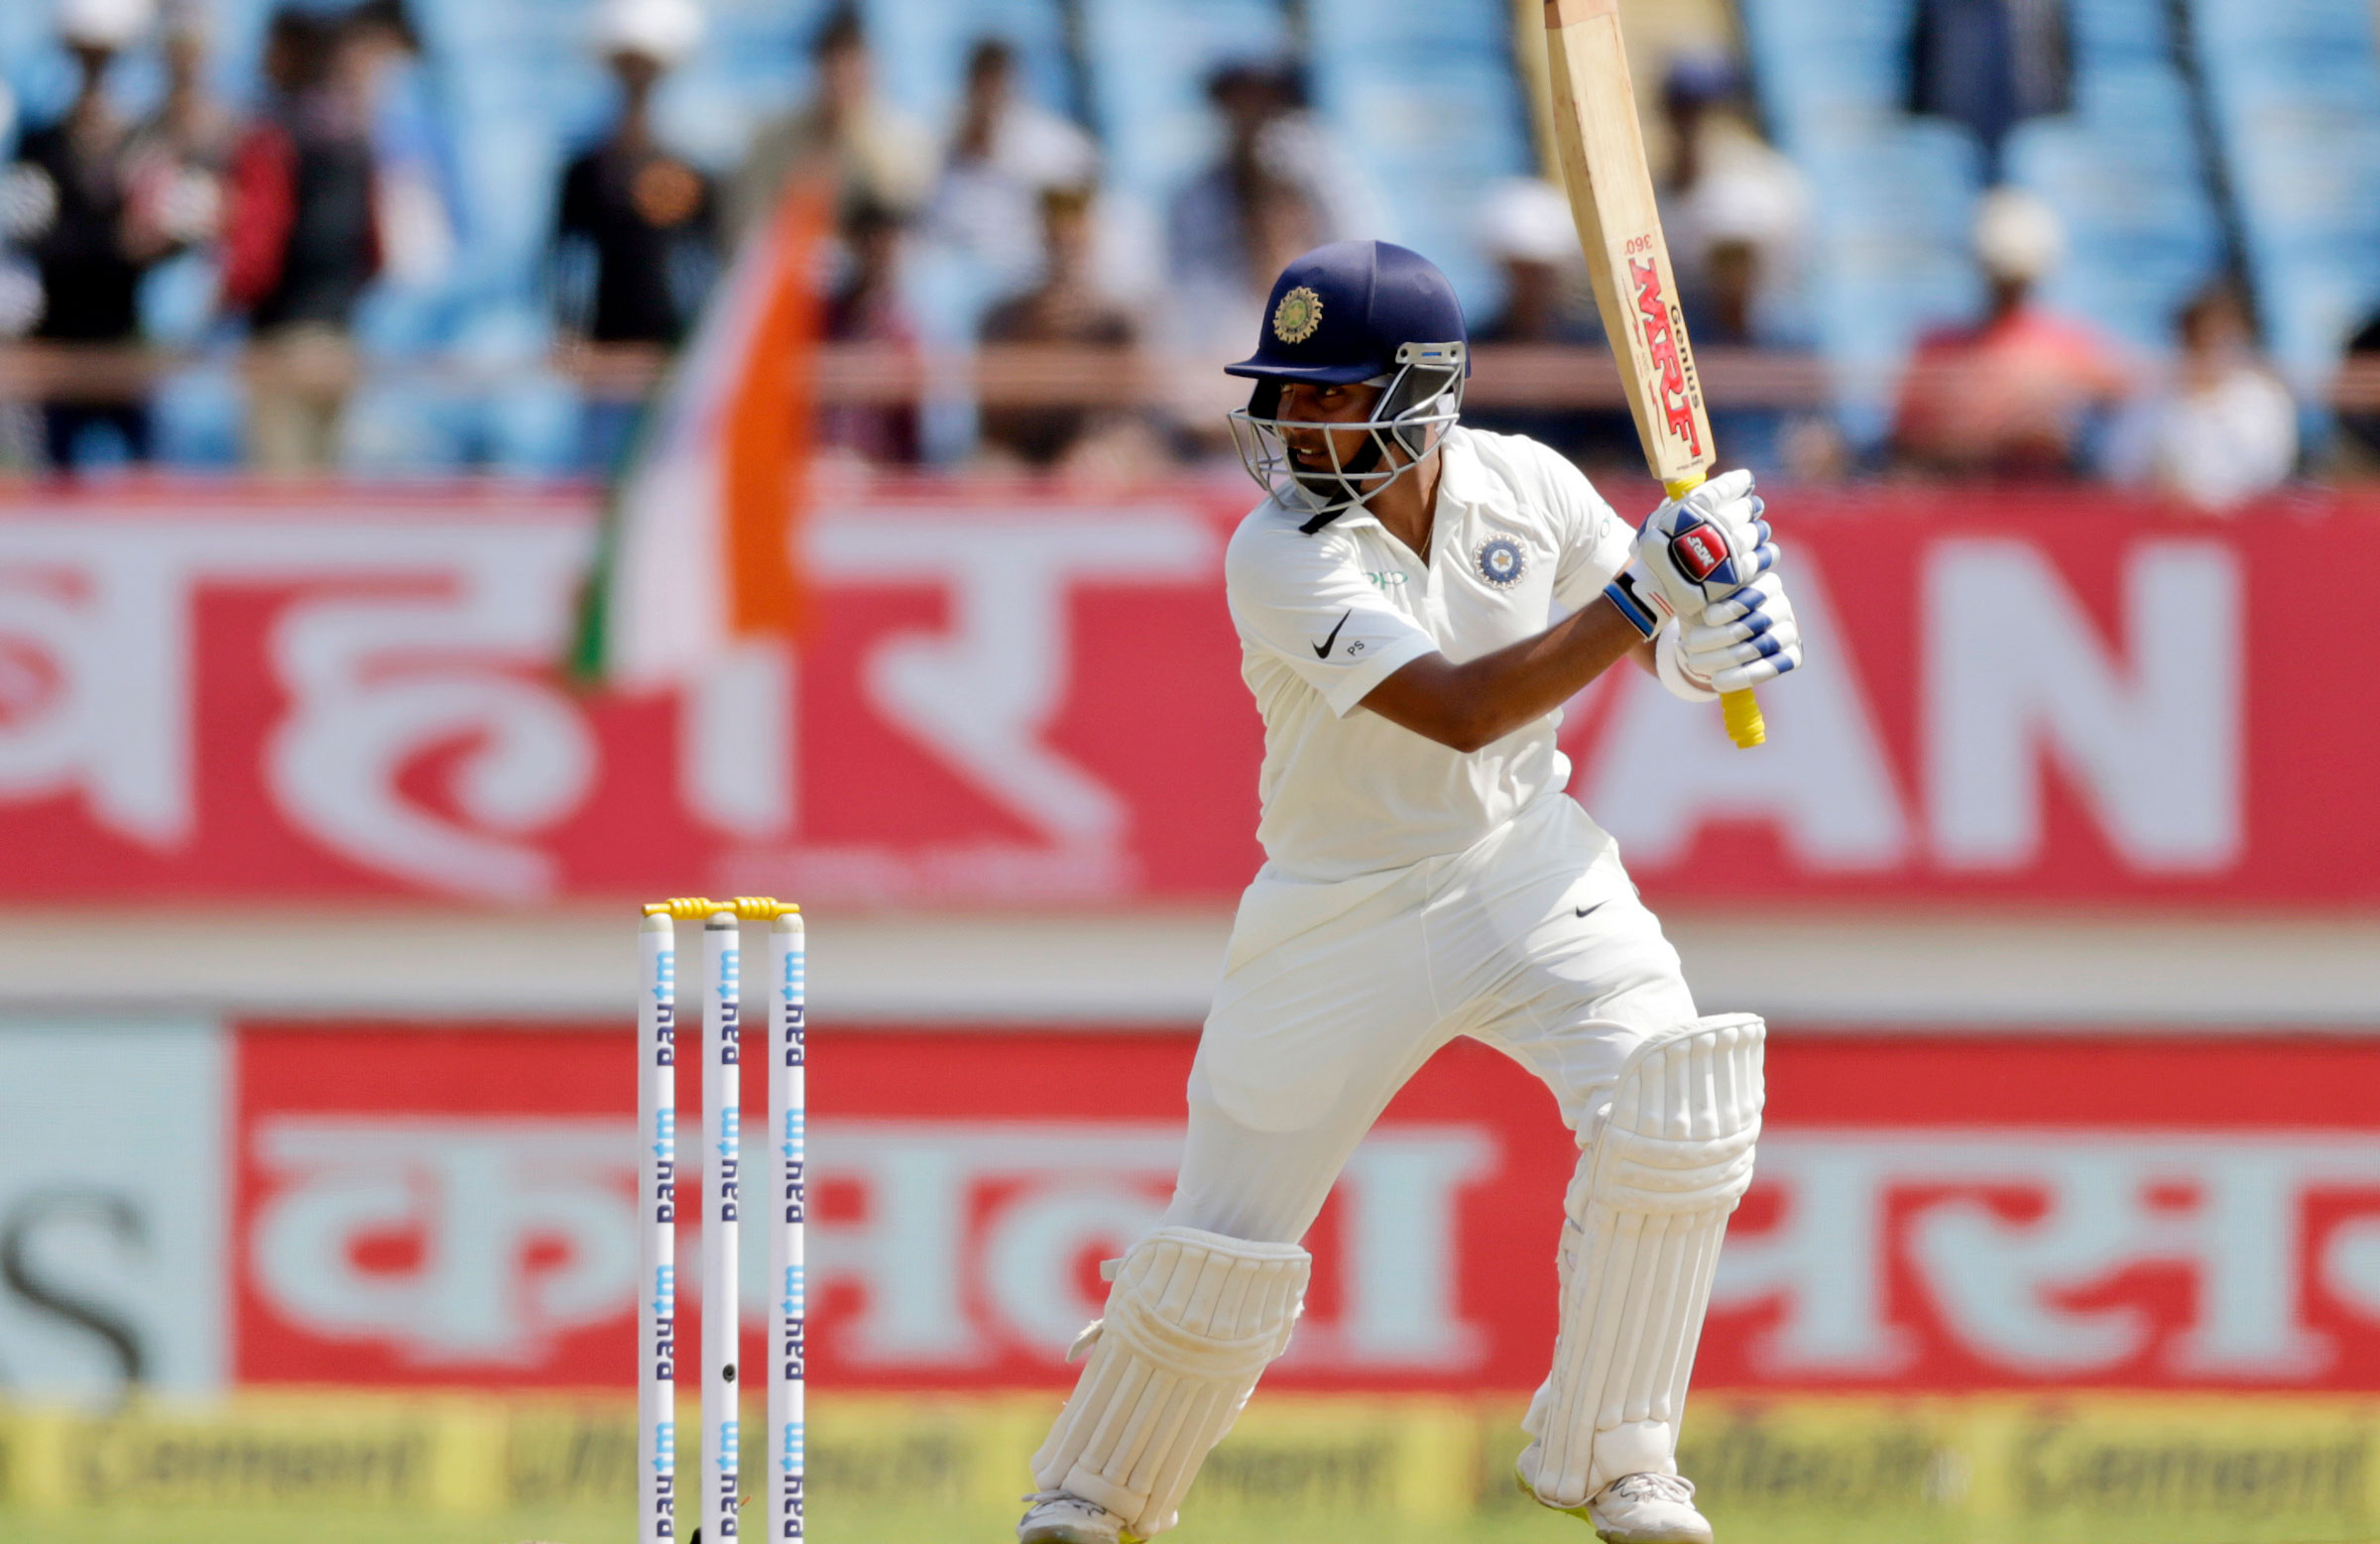 वेस्टइंडीज के खिलाफ 33वां रन बनाते ही पृथ्वी शॉ ने रचा इतिहास, ऐसा करने वाले भारत के पहले खिलाड़ी बने शॉ 5